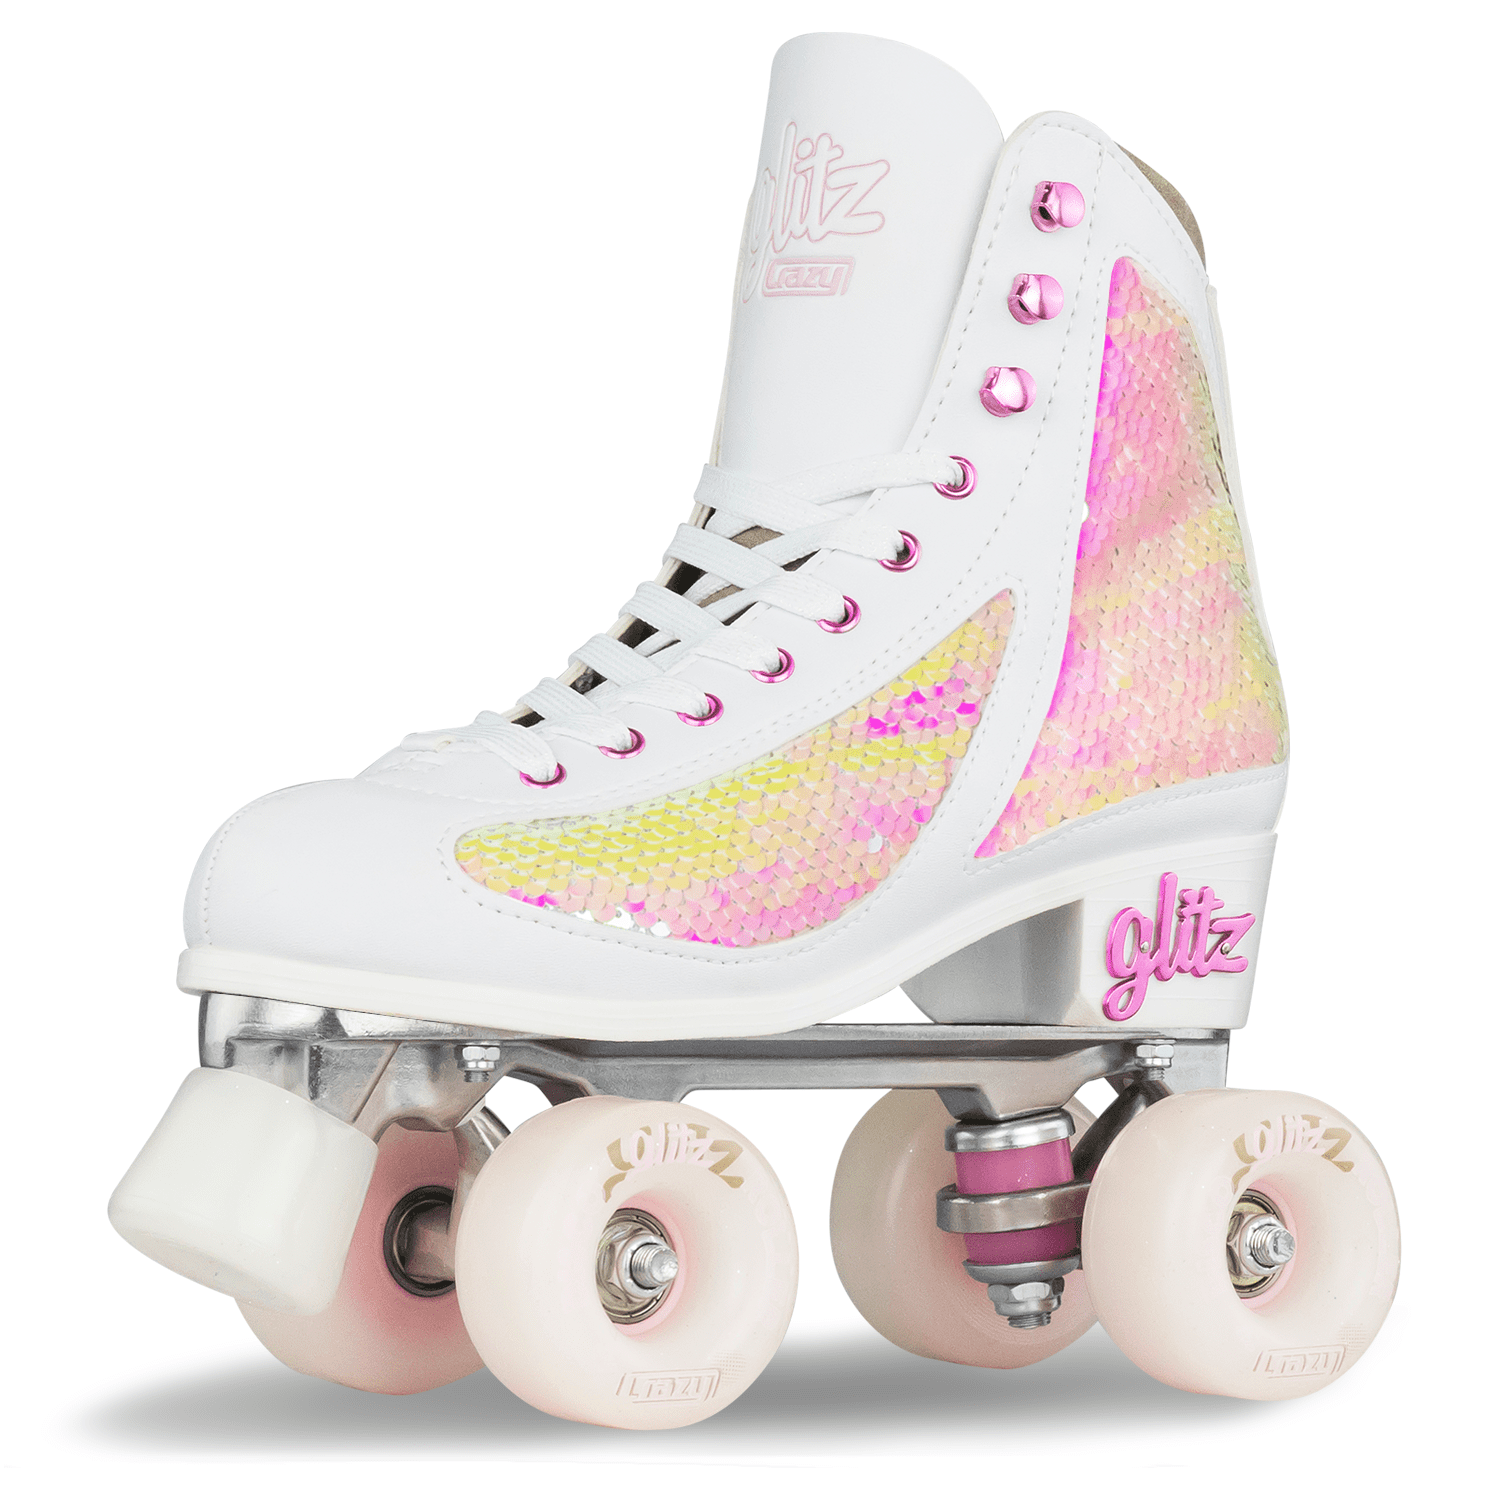 Crazy Skates Glitz Roller SkatesAdjustable or Fixed SizesGlitter Sparkl... 